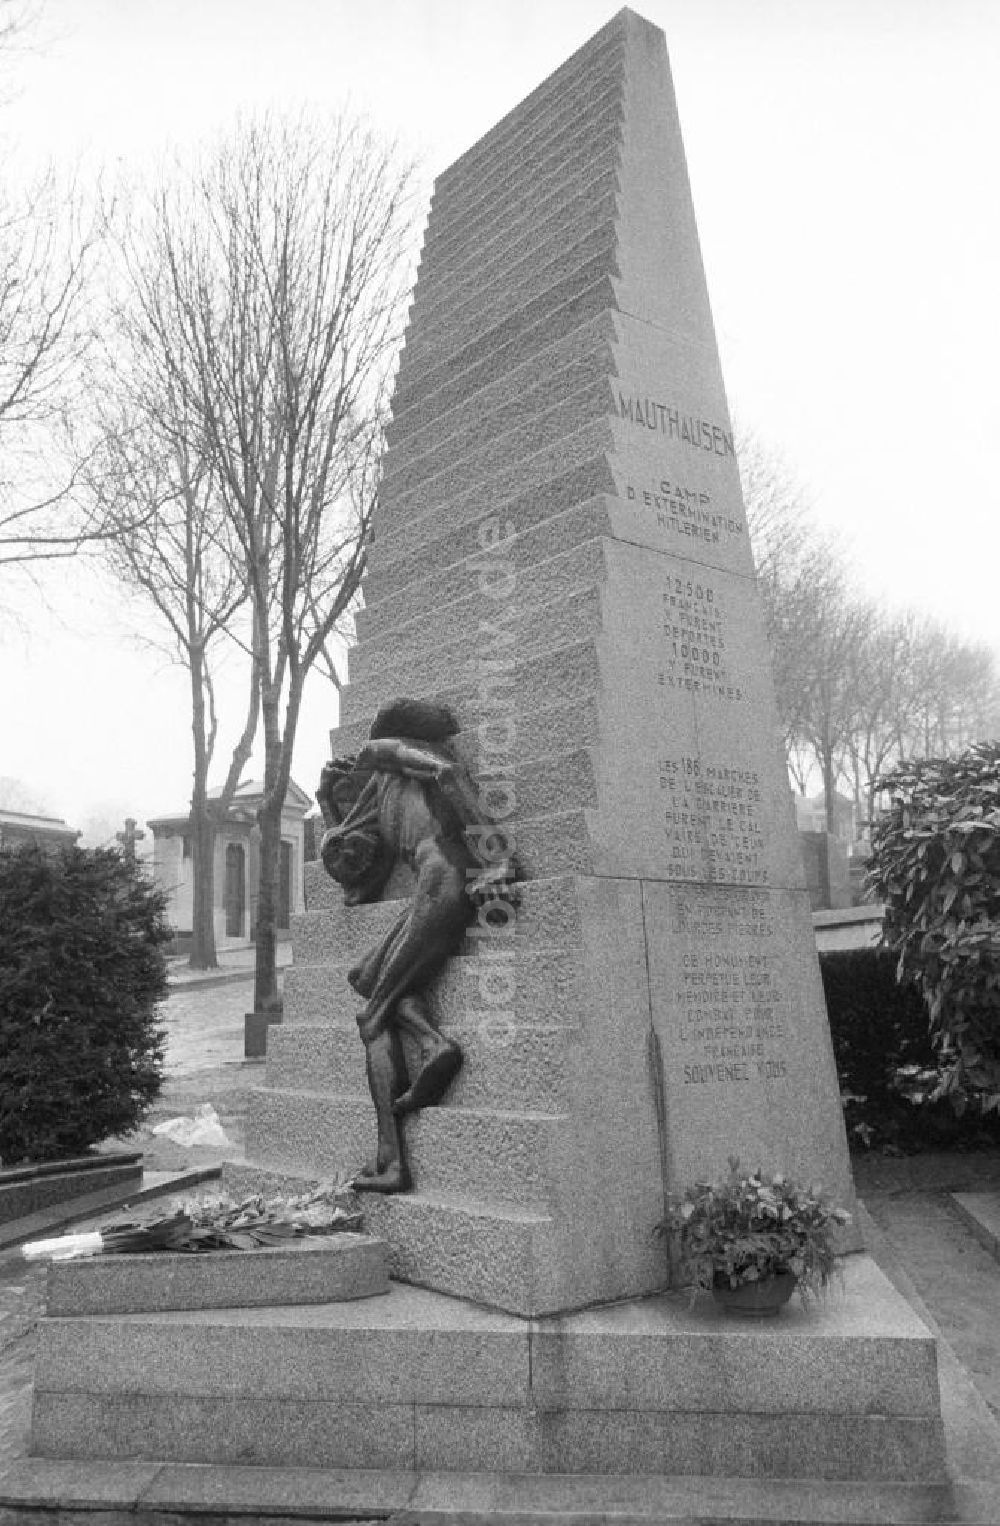 Paris: Denkmal Mauthausen auf dem Friedhof Pere Lachaise in Frankreich-Paris